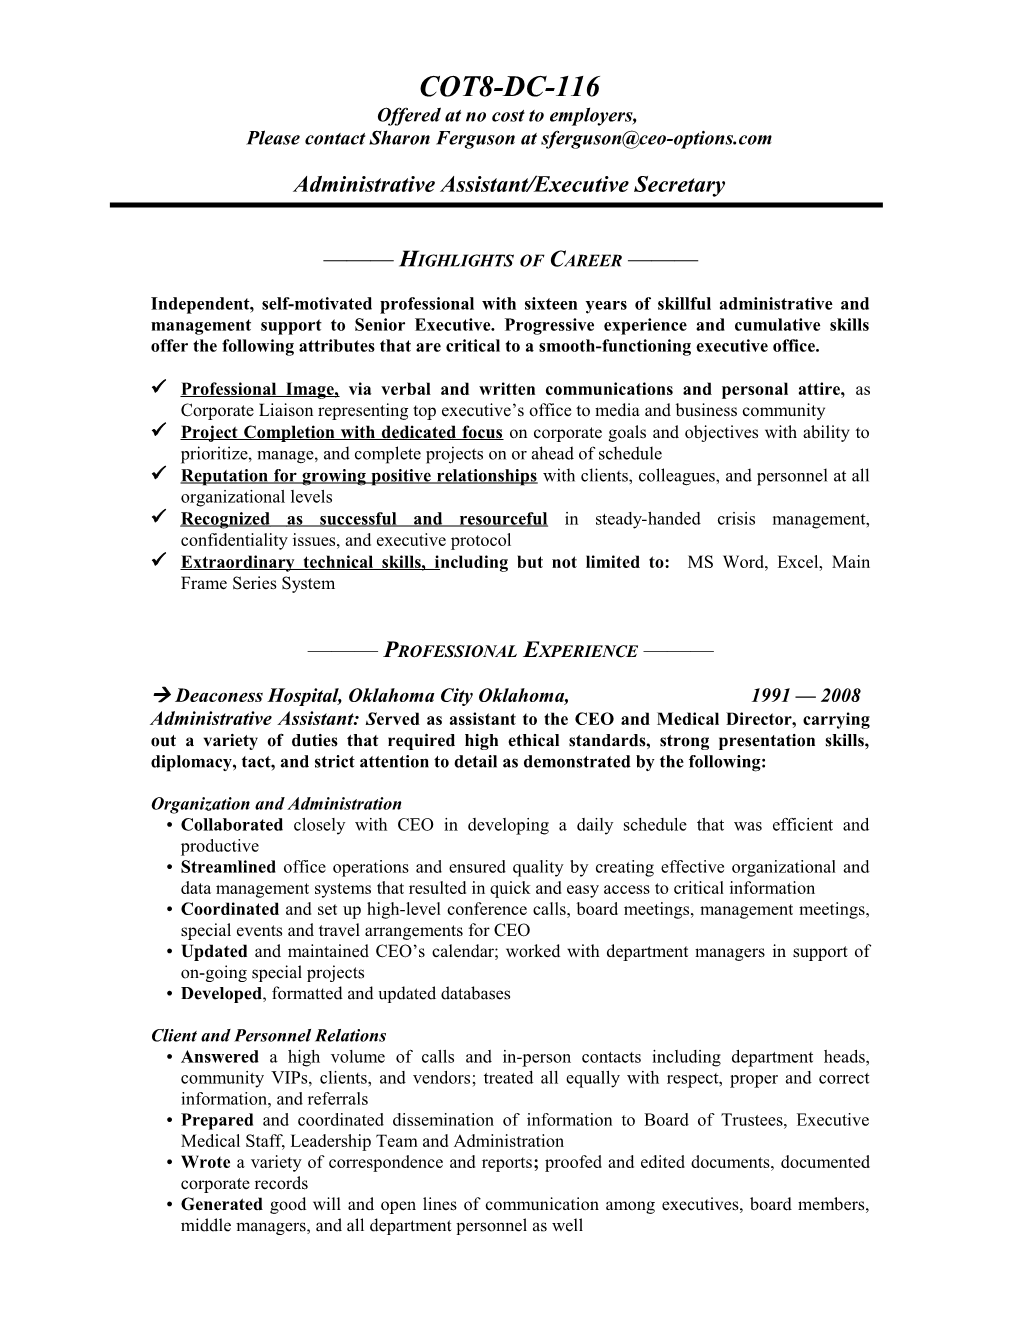 Administrative Assistant/Executive Secretary